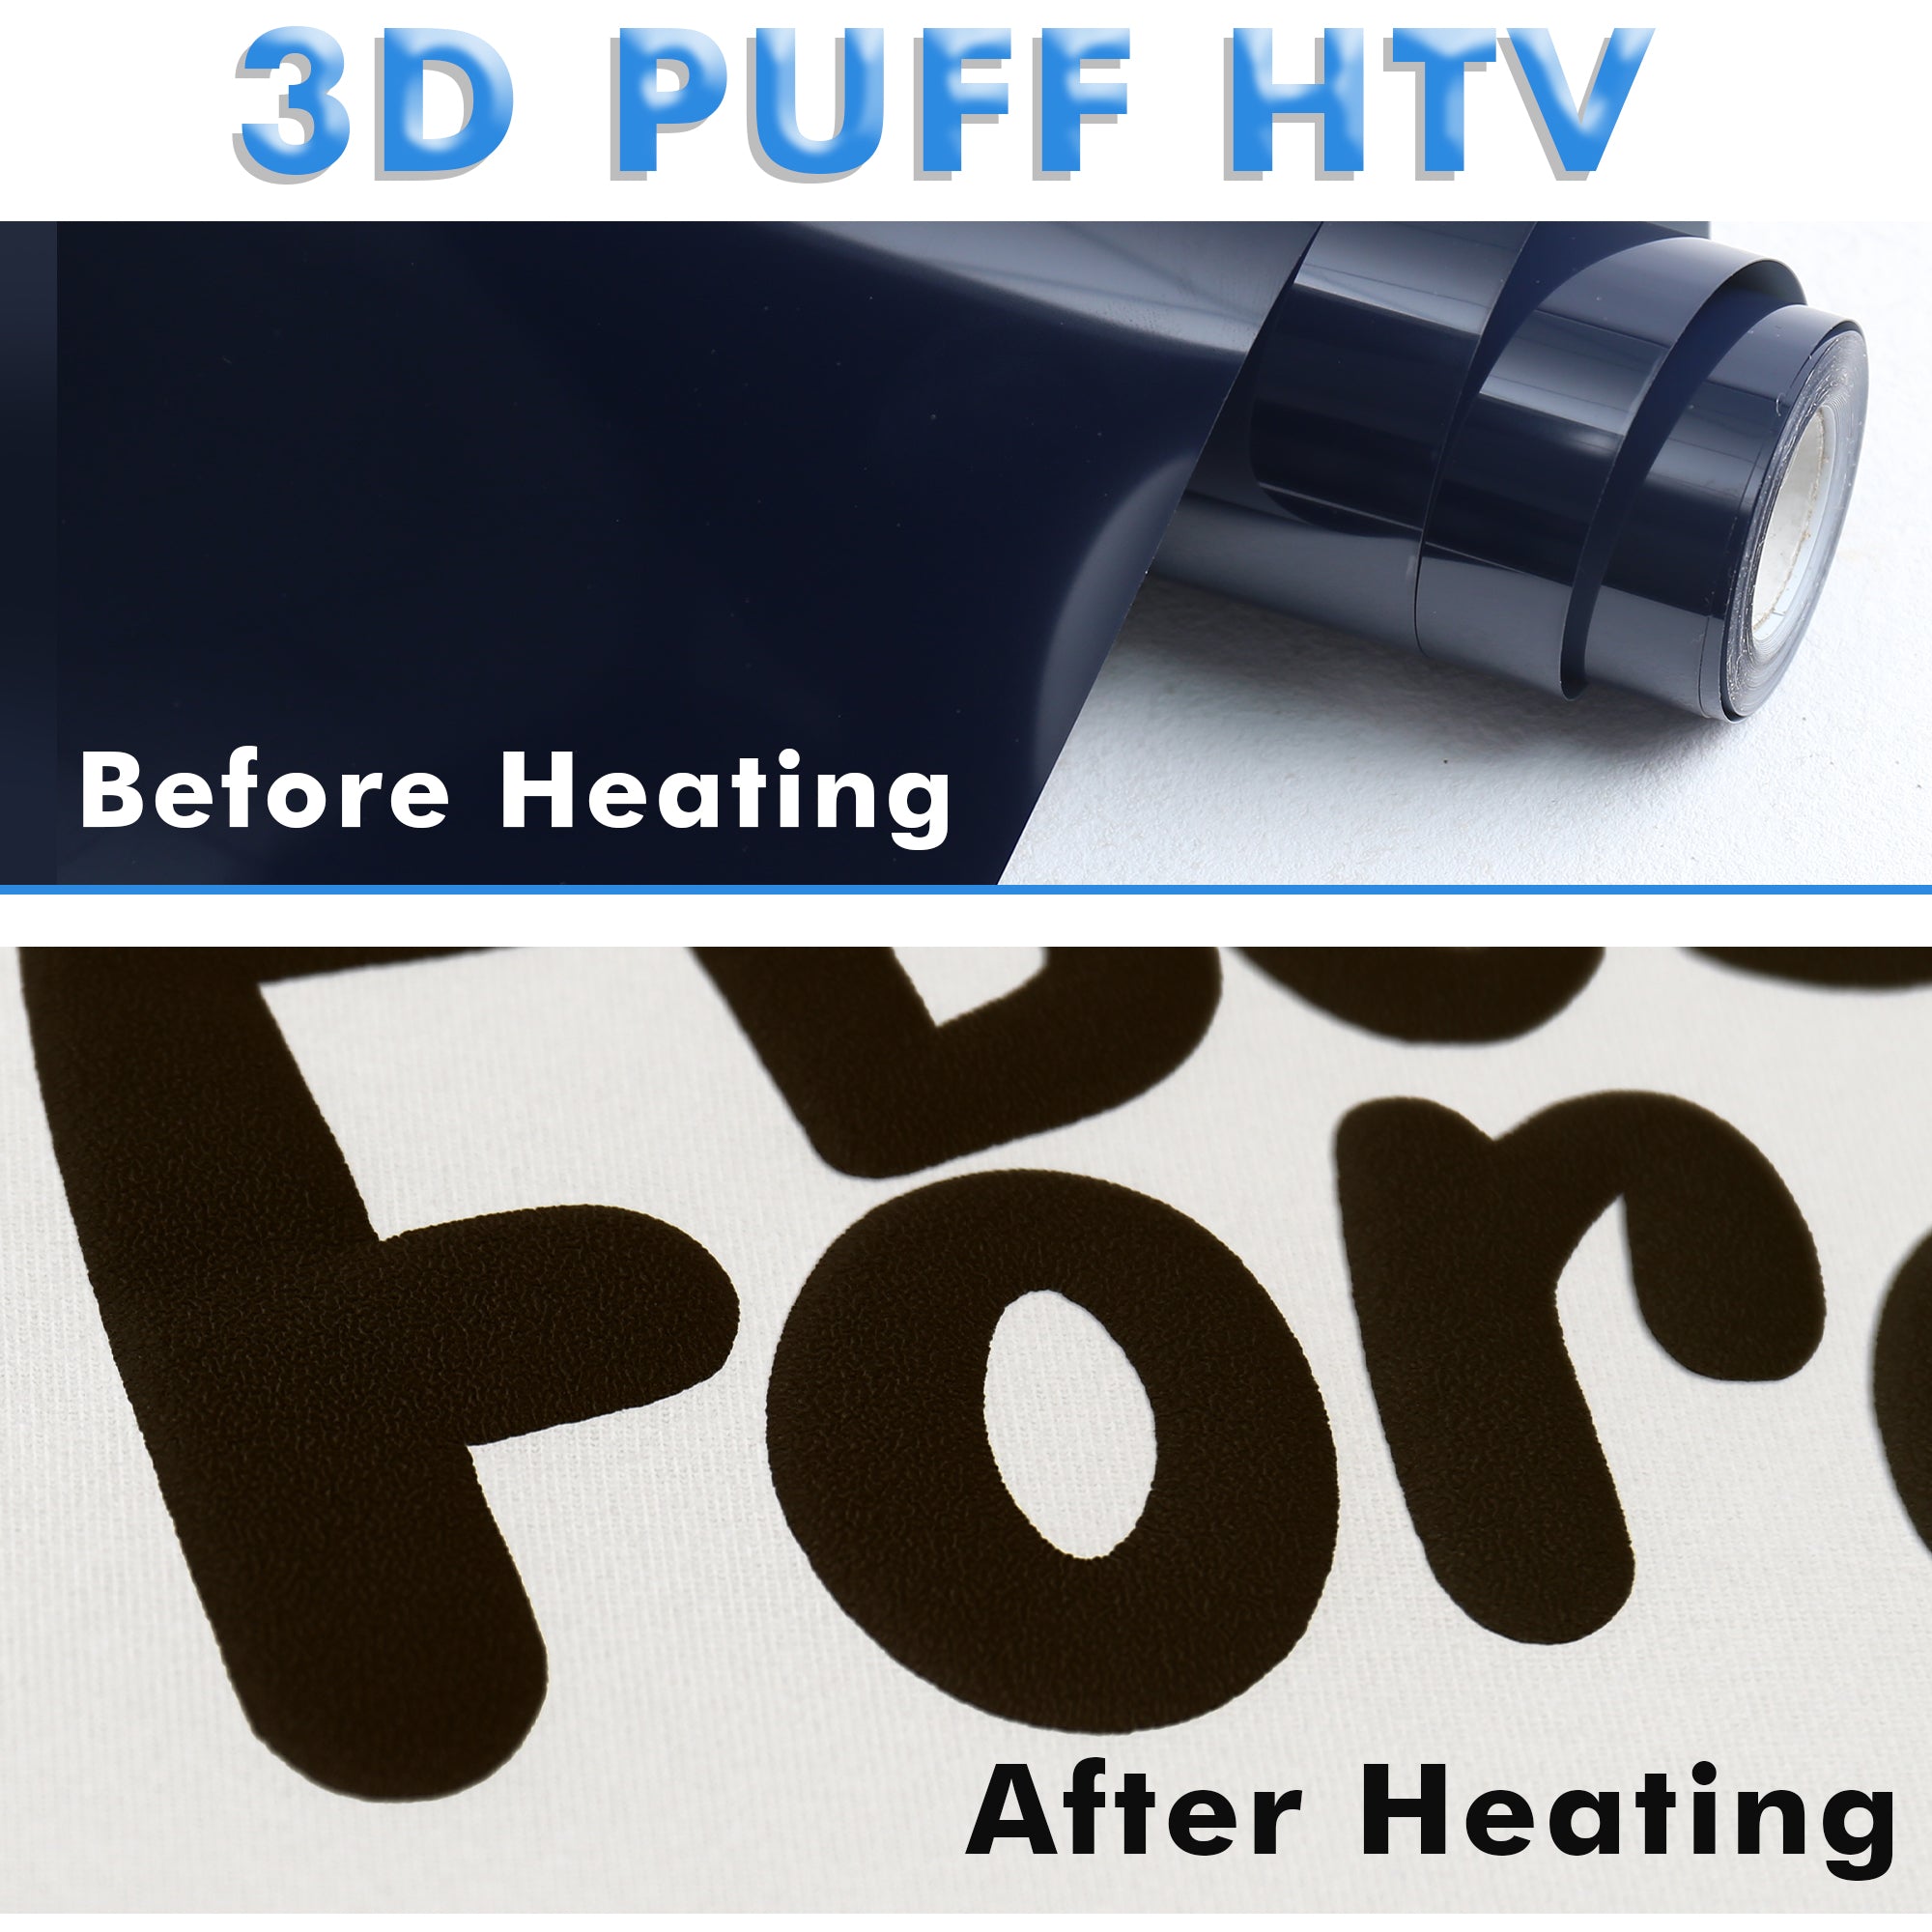 [Pre-sale]A-SUB  3D Puff Vinyl Heat Transfer - Black Puff Vinyl Roll 10''x 8FT